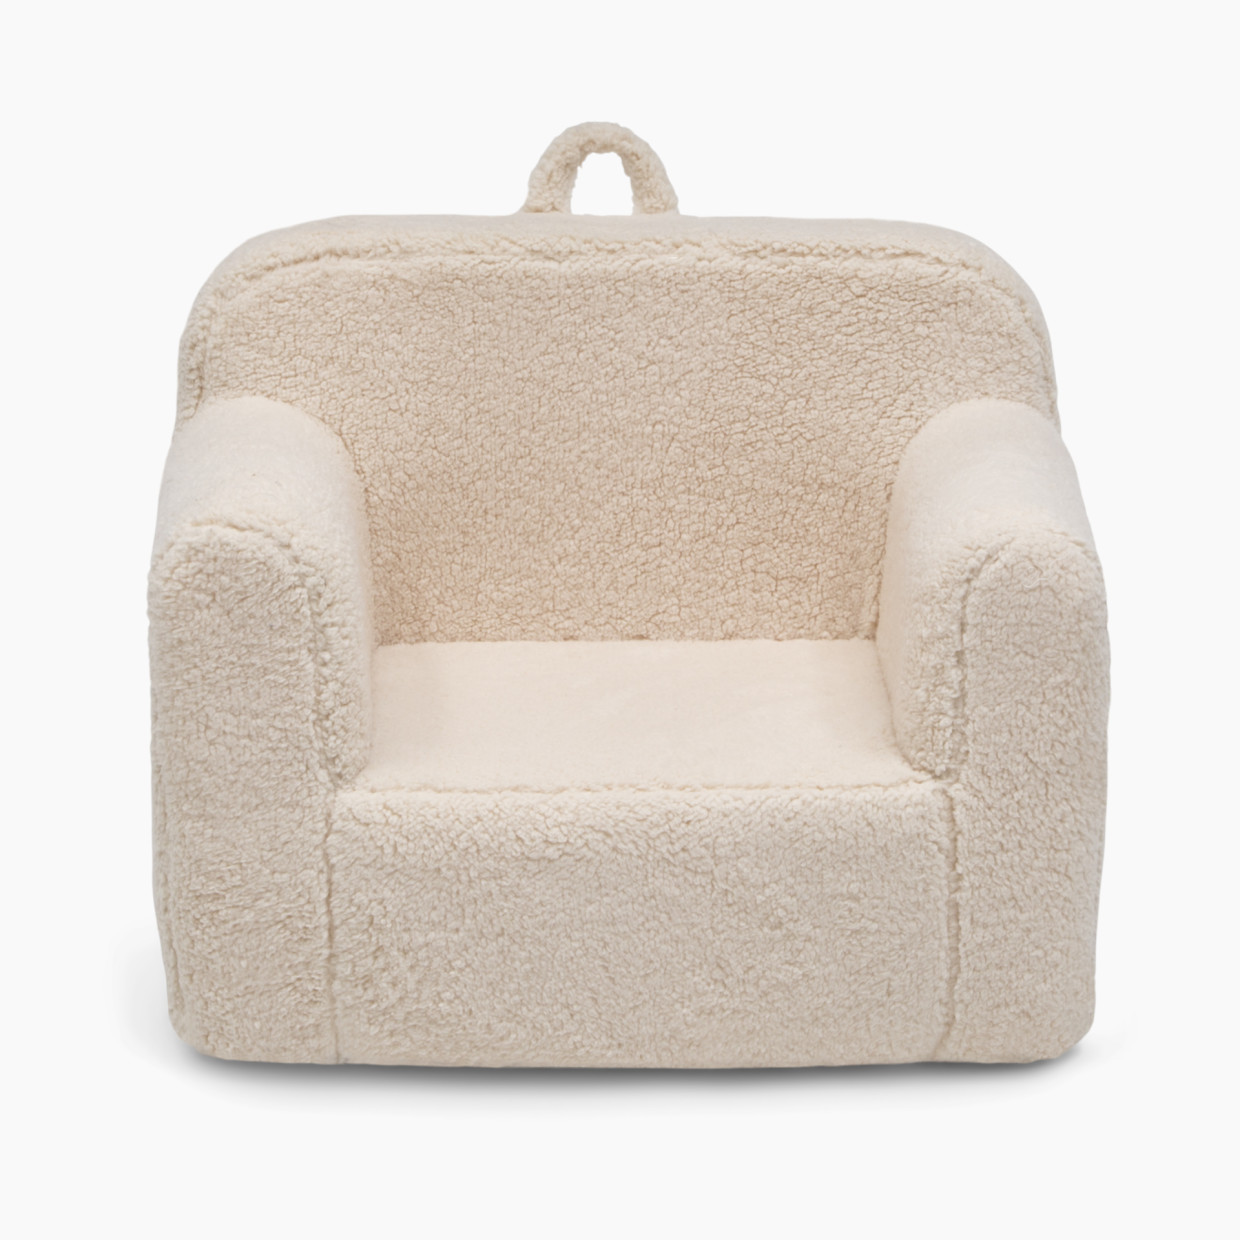 Delta Children Cozee High Pile Fleece Chair - Sherpa Cream.